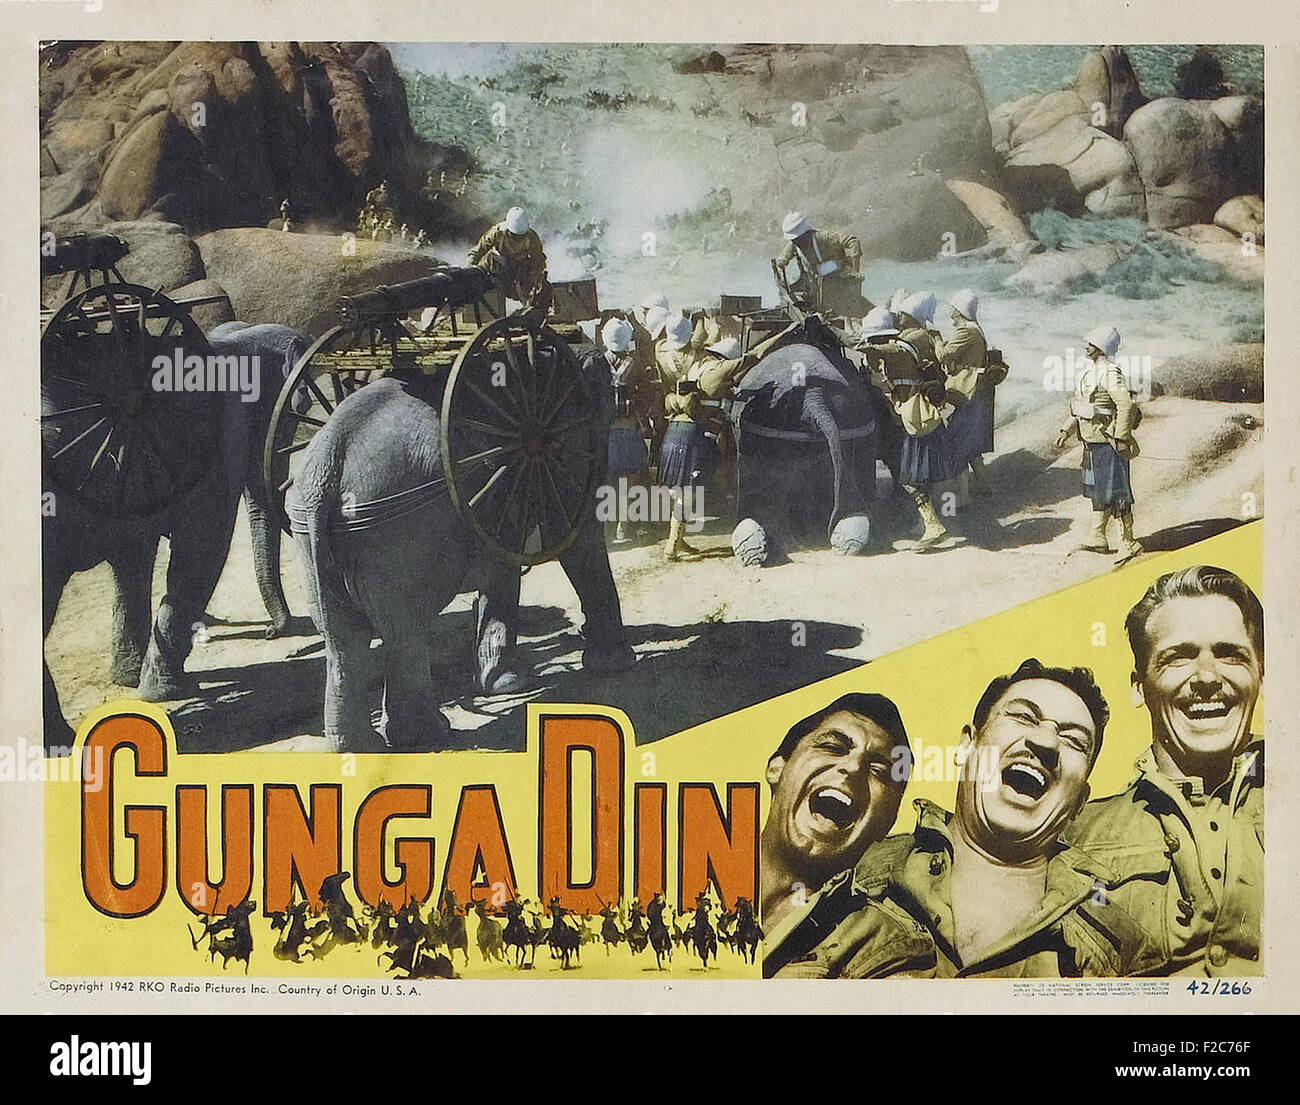 Gunga DIN 16 - poster del filmato Foto Stock